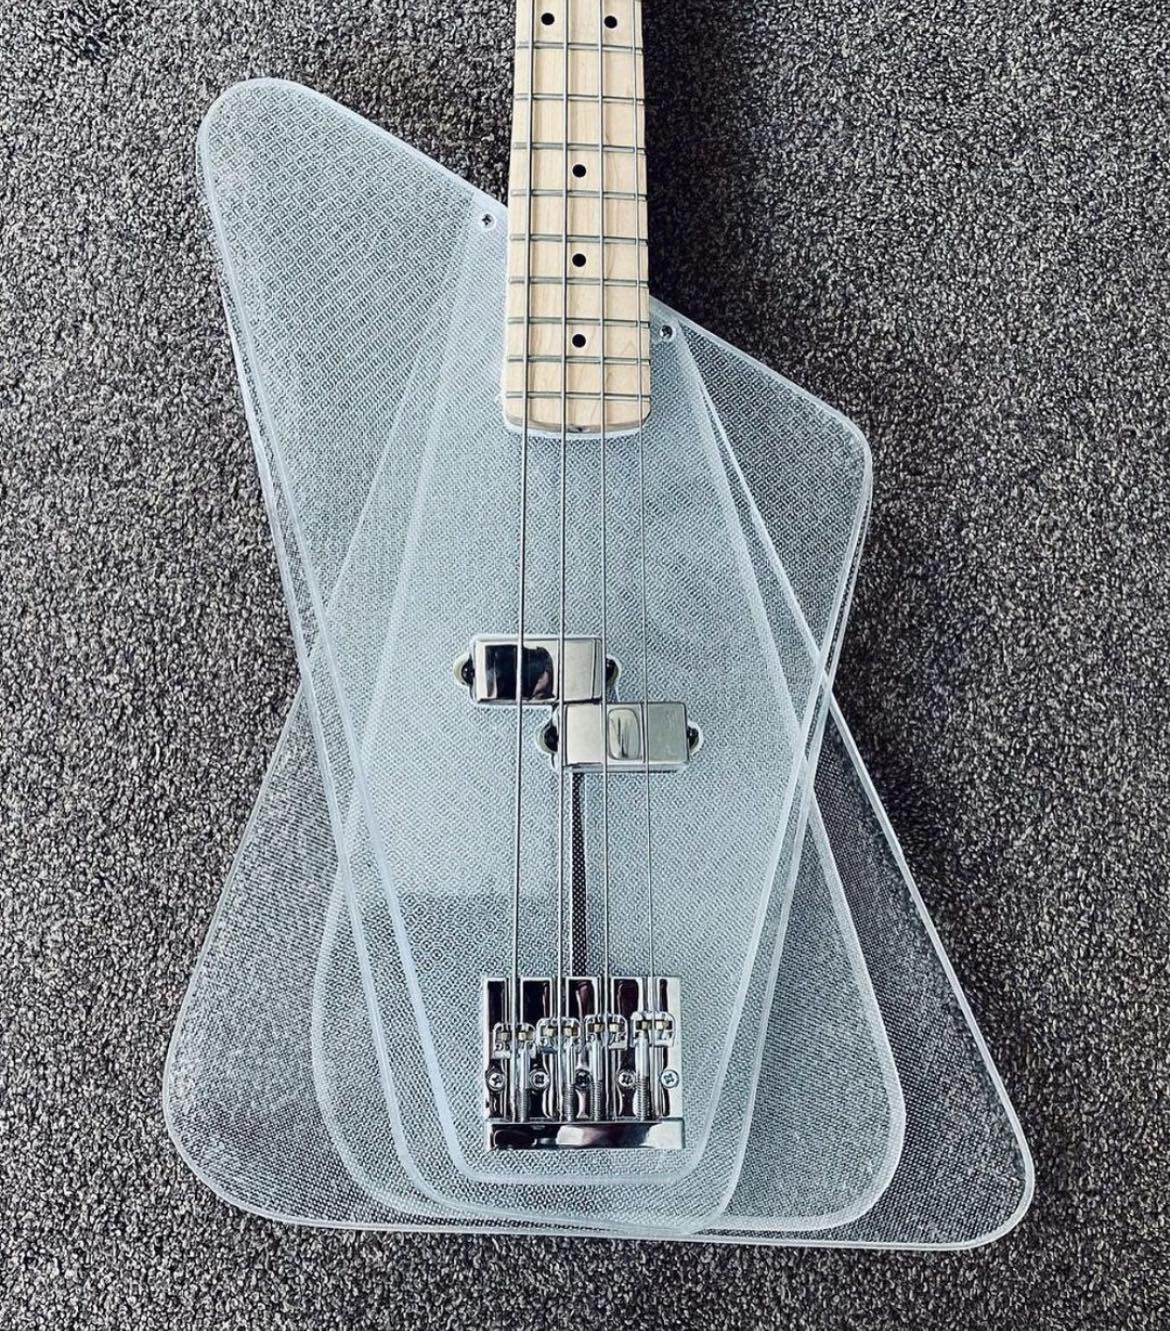 Photo: Instagram Brute Bass guitars